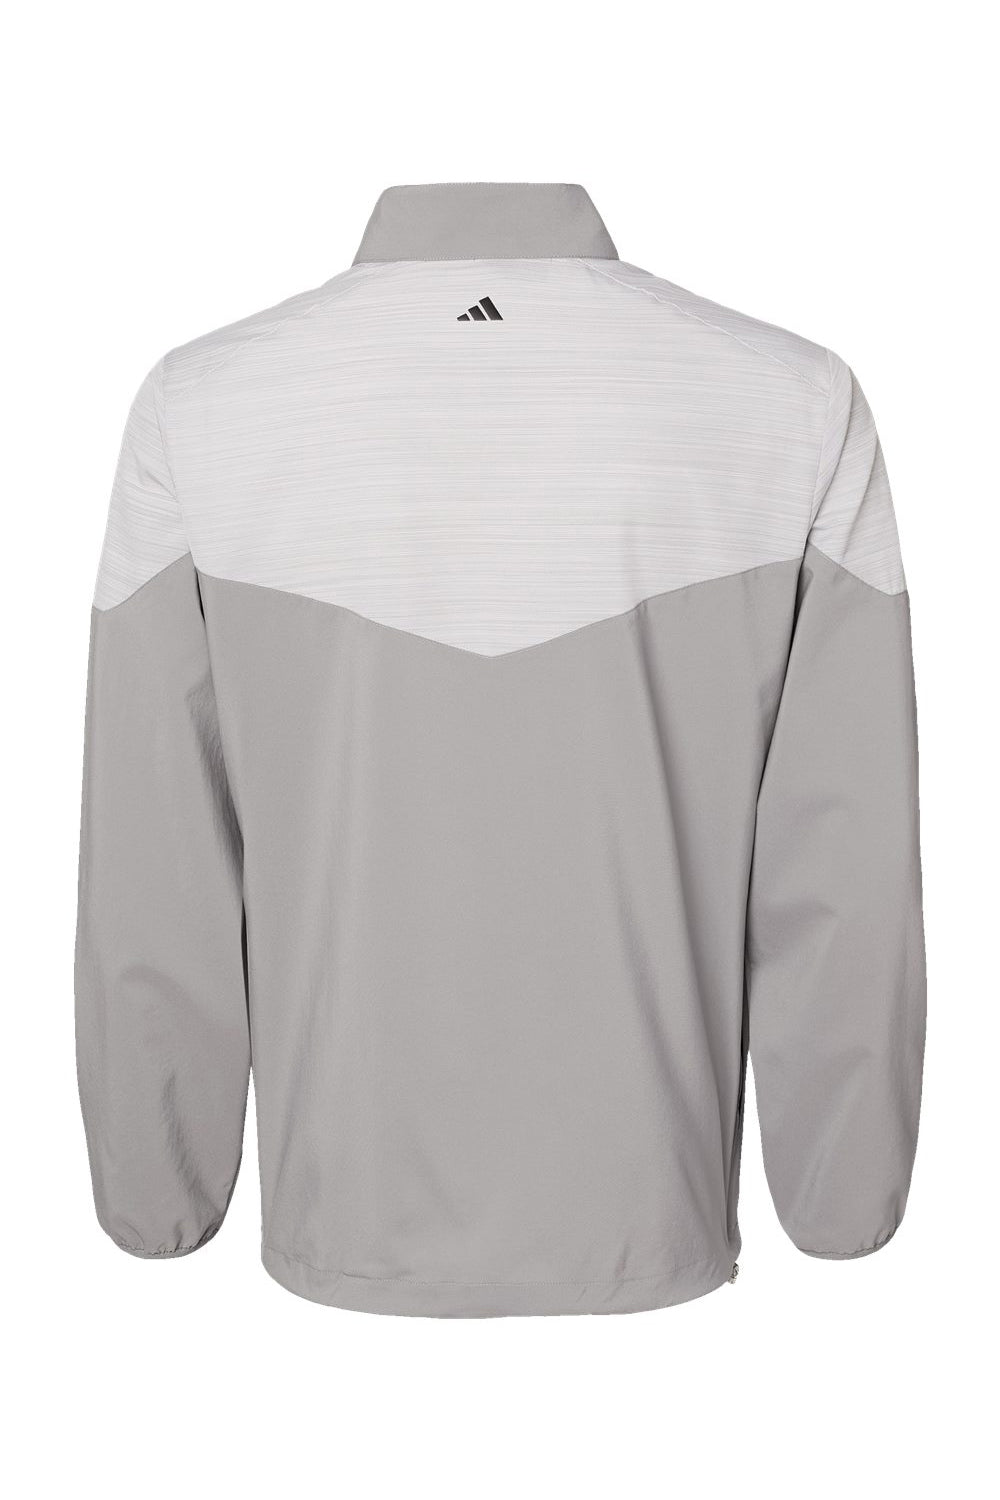 Adidas A546 Mens Chevron Water Resistant 1/4 Zip Windshirt Jacket Grey/Heather Grey Flat Back